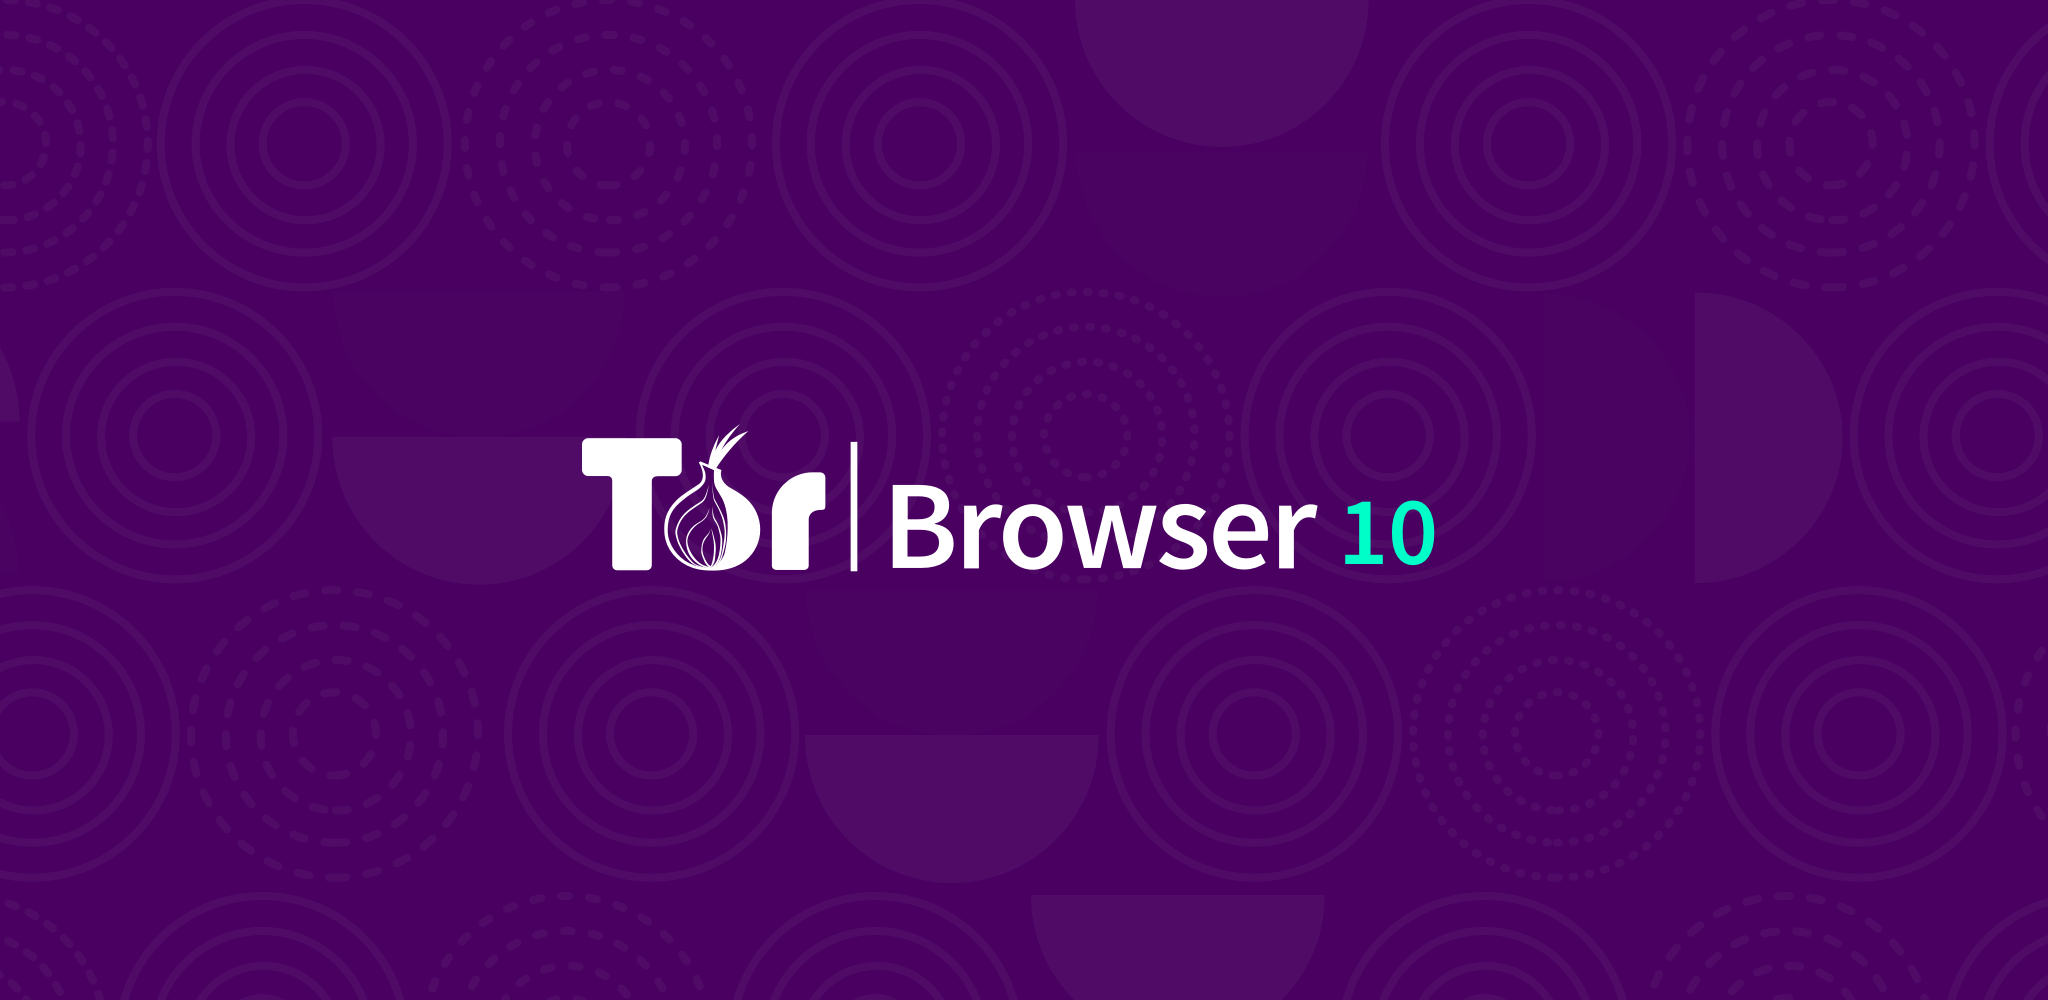 Tor browser 2019 года как установить флеш плеер для браузера тор hydra